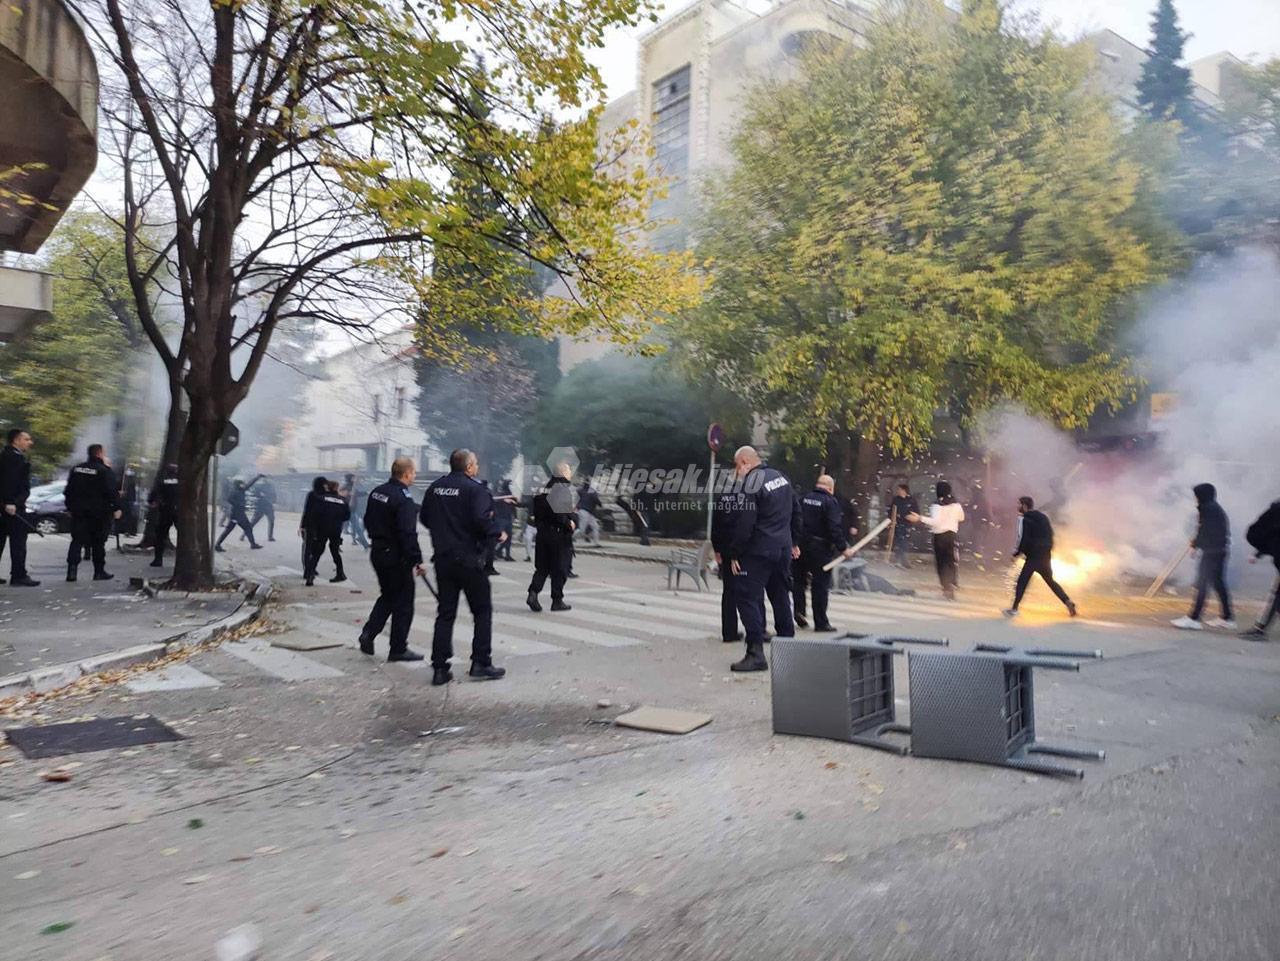 Sukob navijača u Mostaru - Avaz